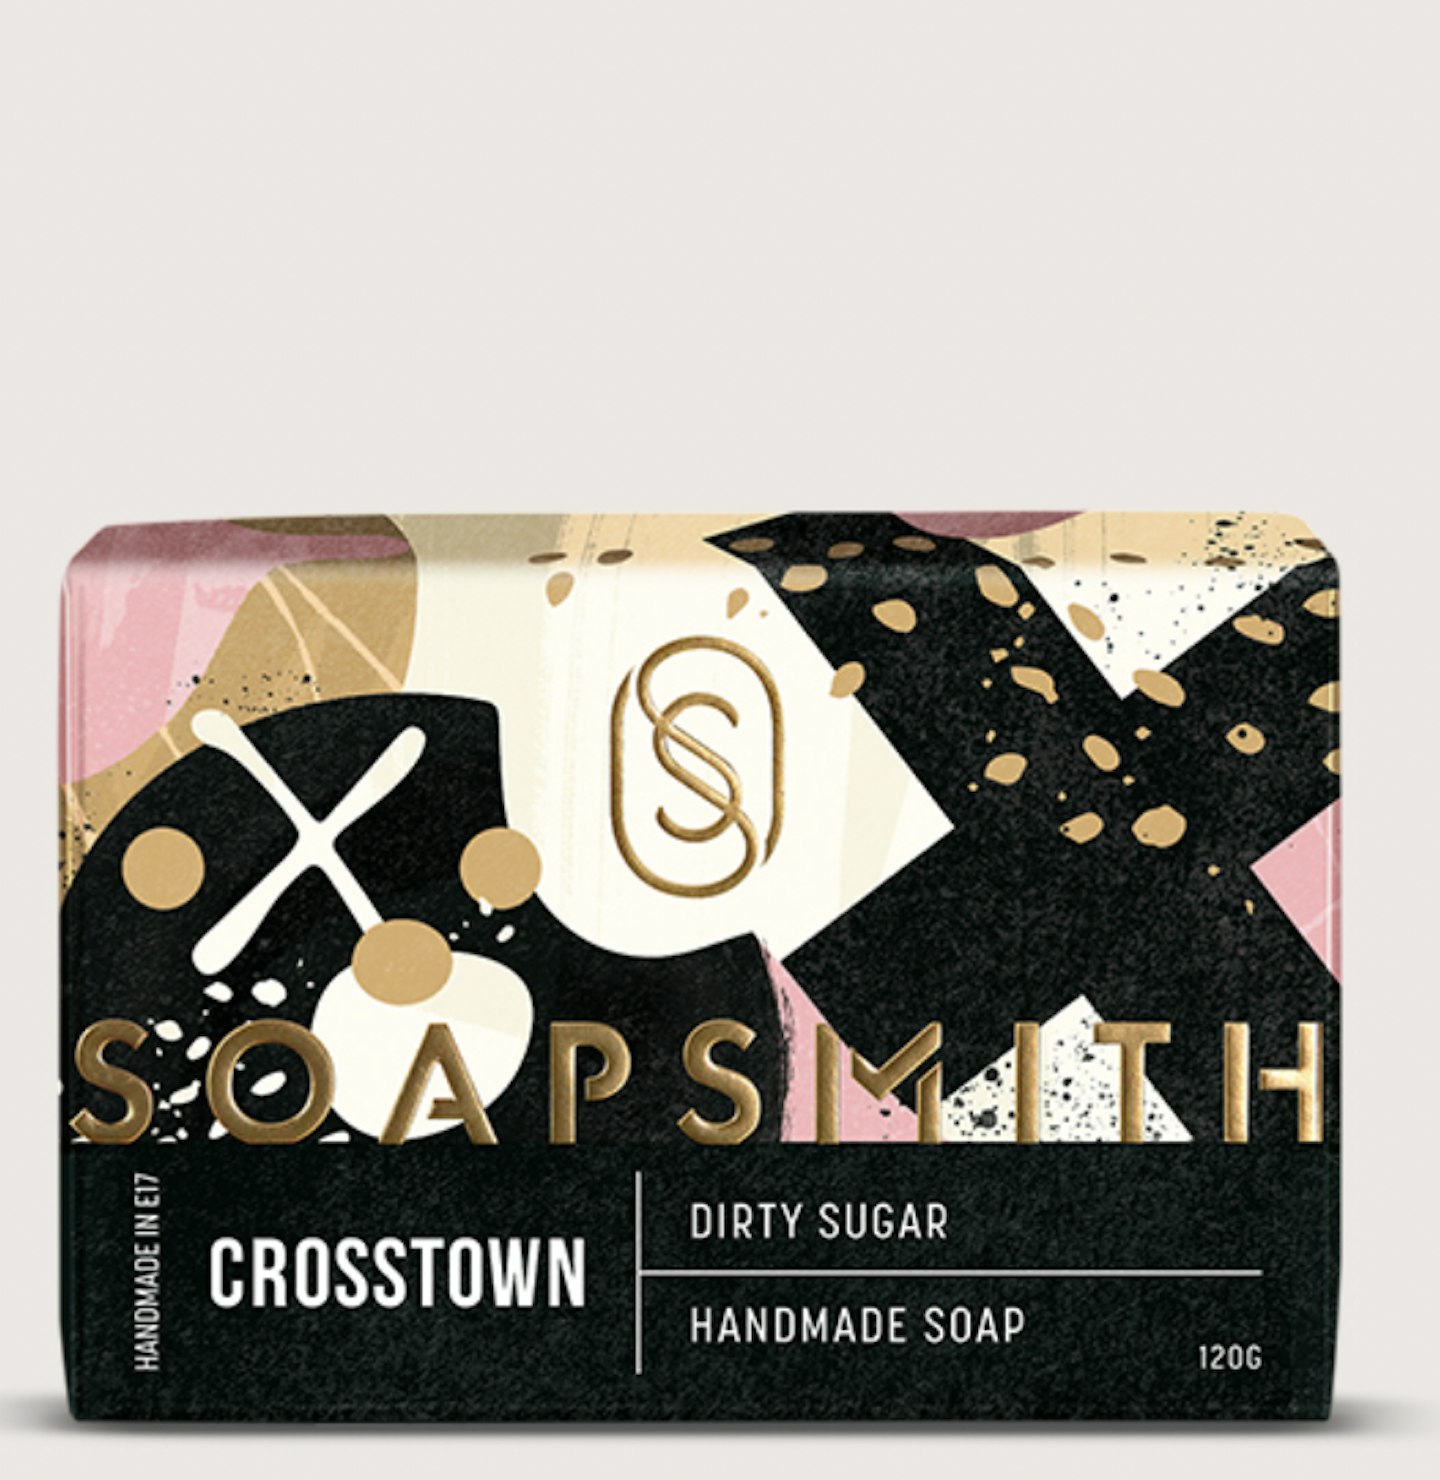 Soapsmith x Crosstown Dirty Sugar Soap, £12